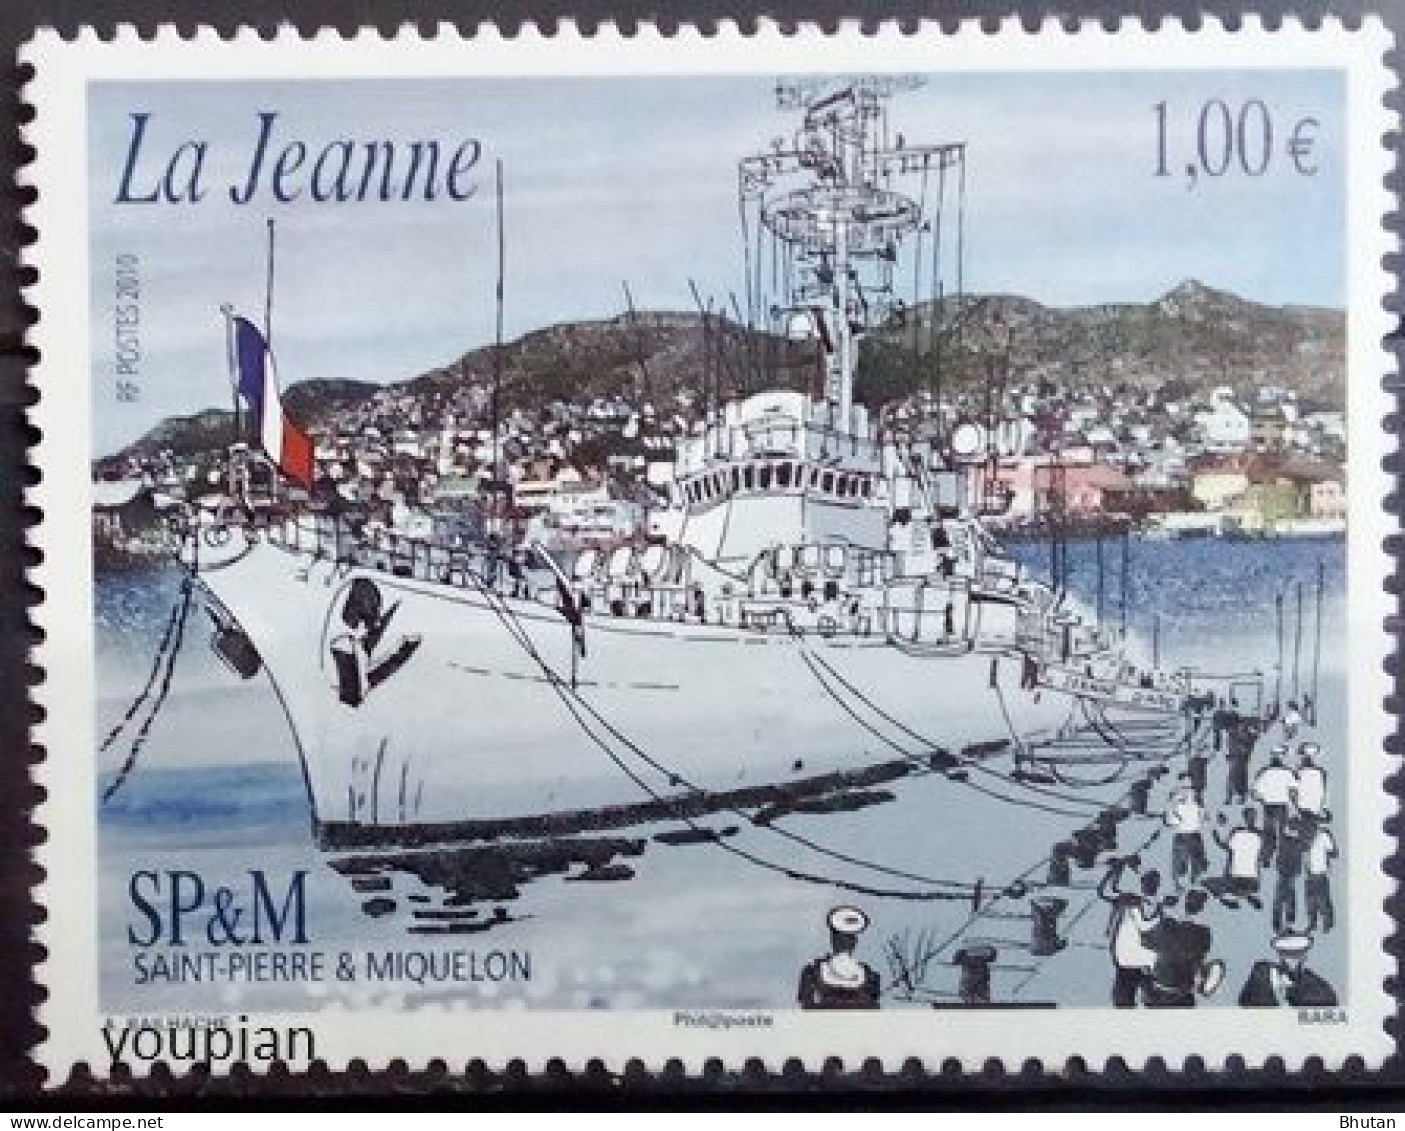 St. Pierre And Miquelon 2010, La Jeanne Navy, MNH Single Stamp - Ongebruikt